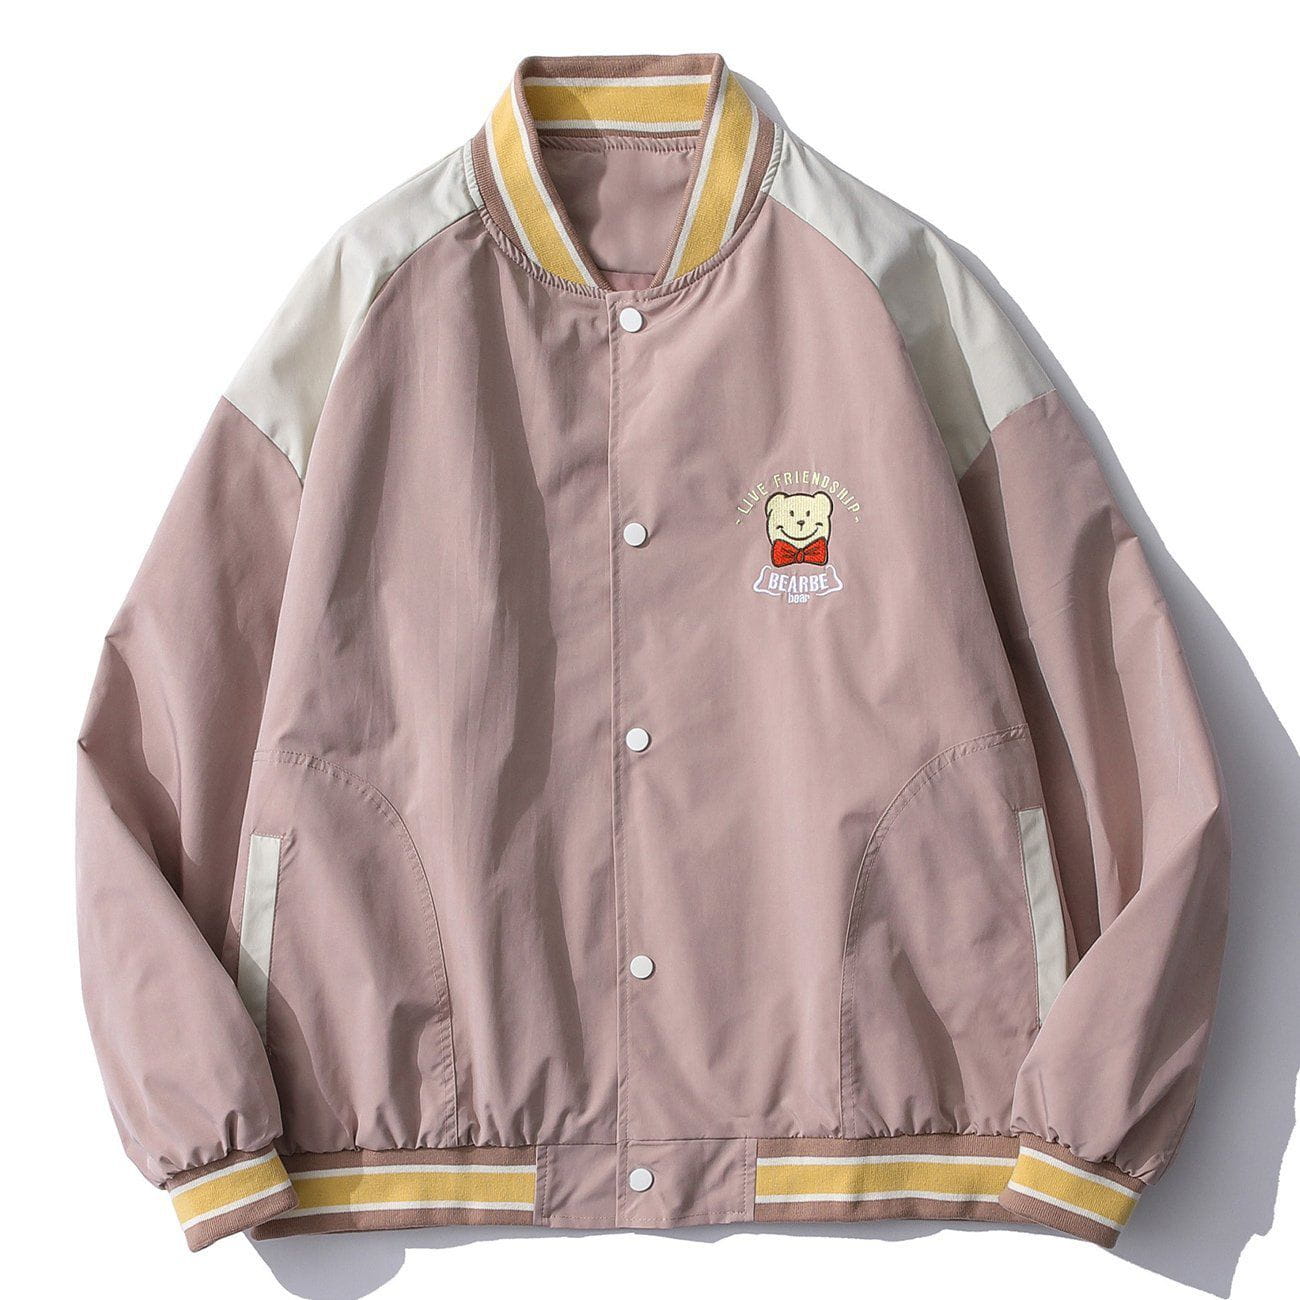 LUXENFY™ - Bear Embroidery Stitching Sleeve Baseball Uniform Jacket luxenfy.com